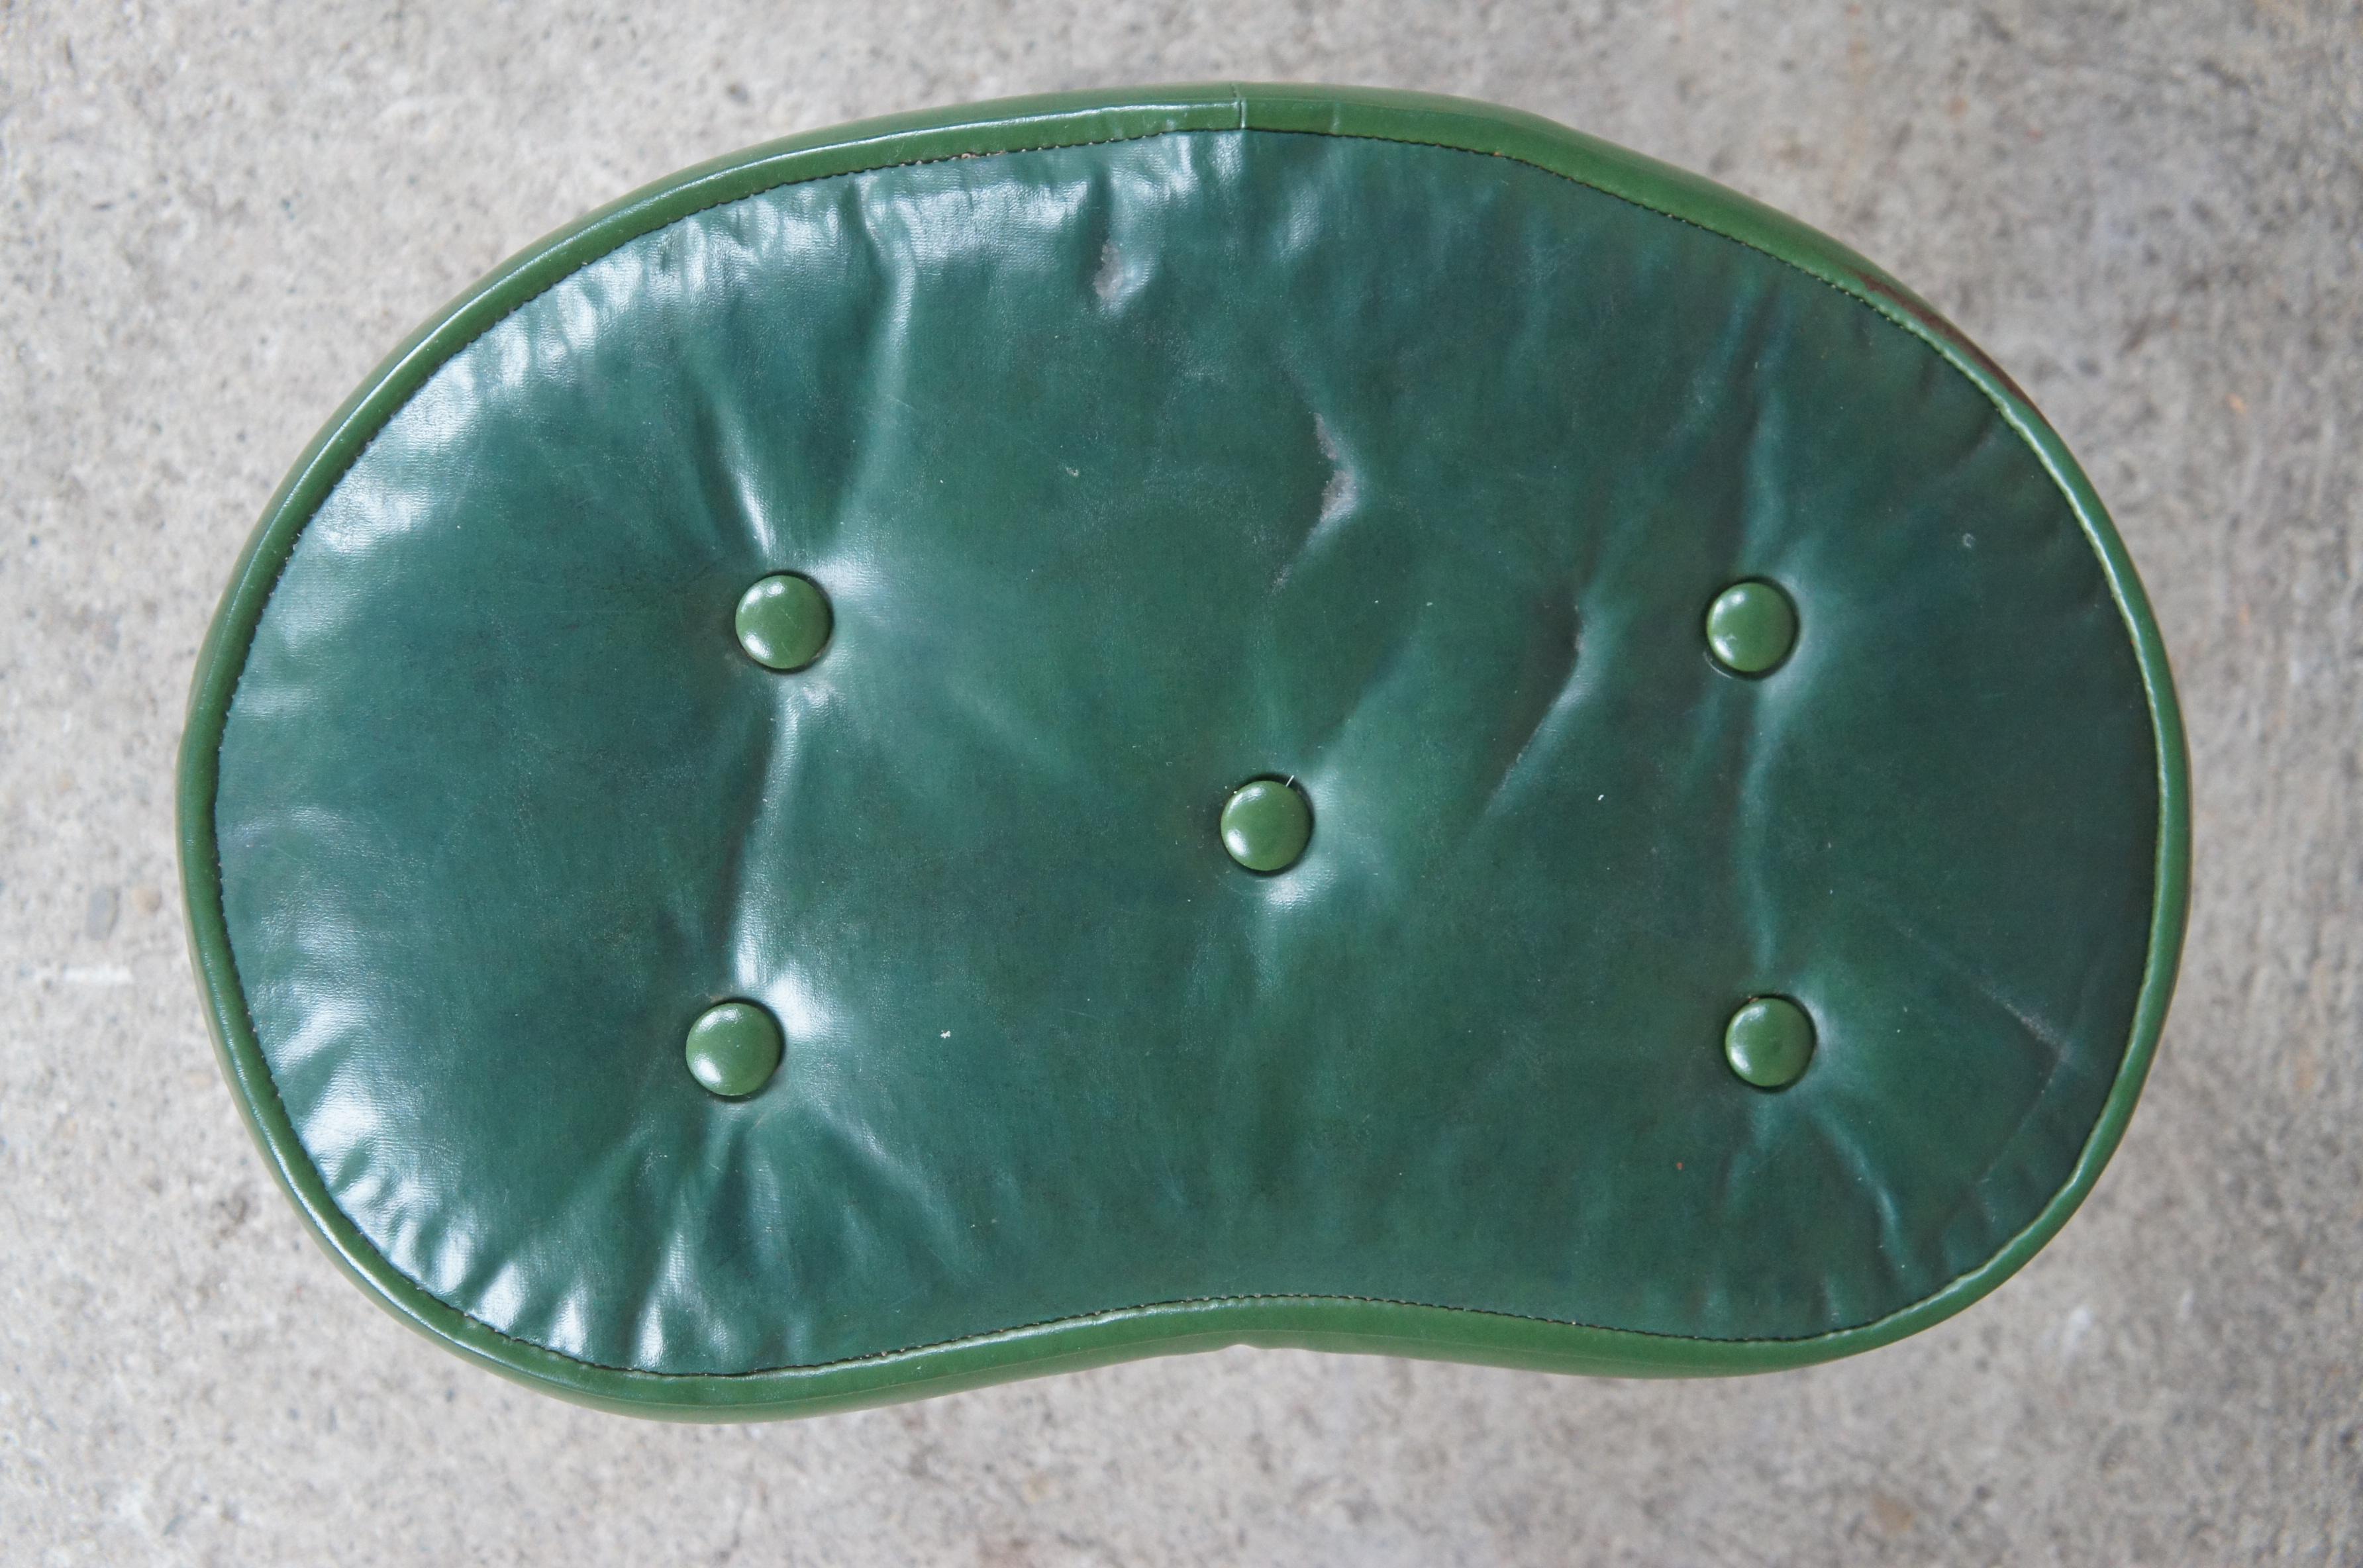 Plastic Midcentury Kidney Bean Shaped Green Vinyl Tufted Foot Stool Bench Ottoman